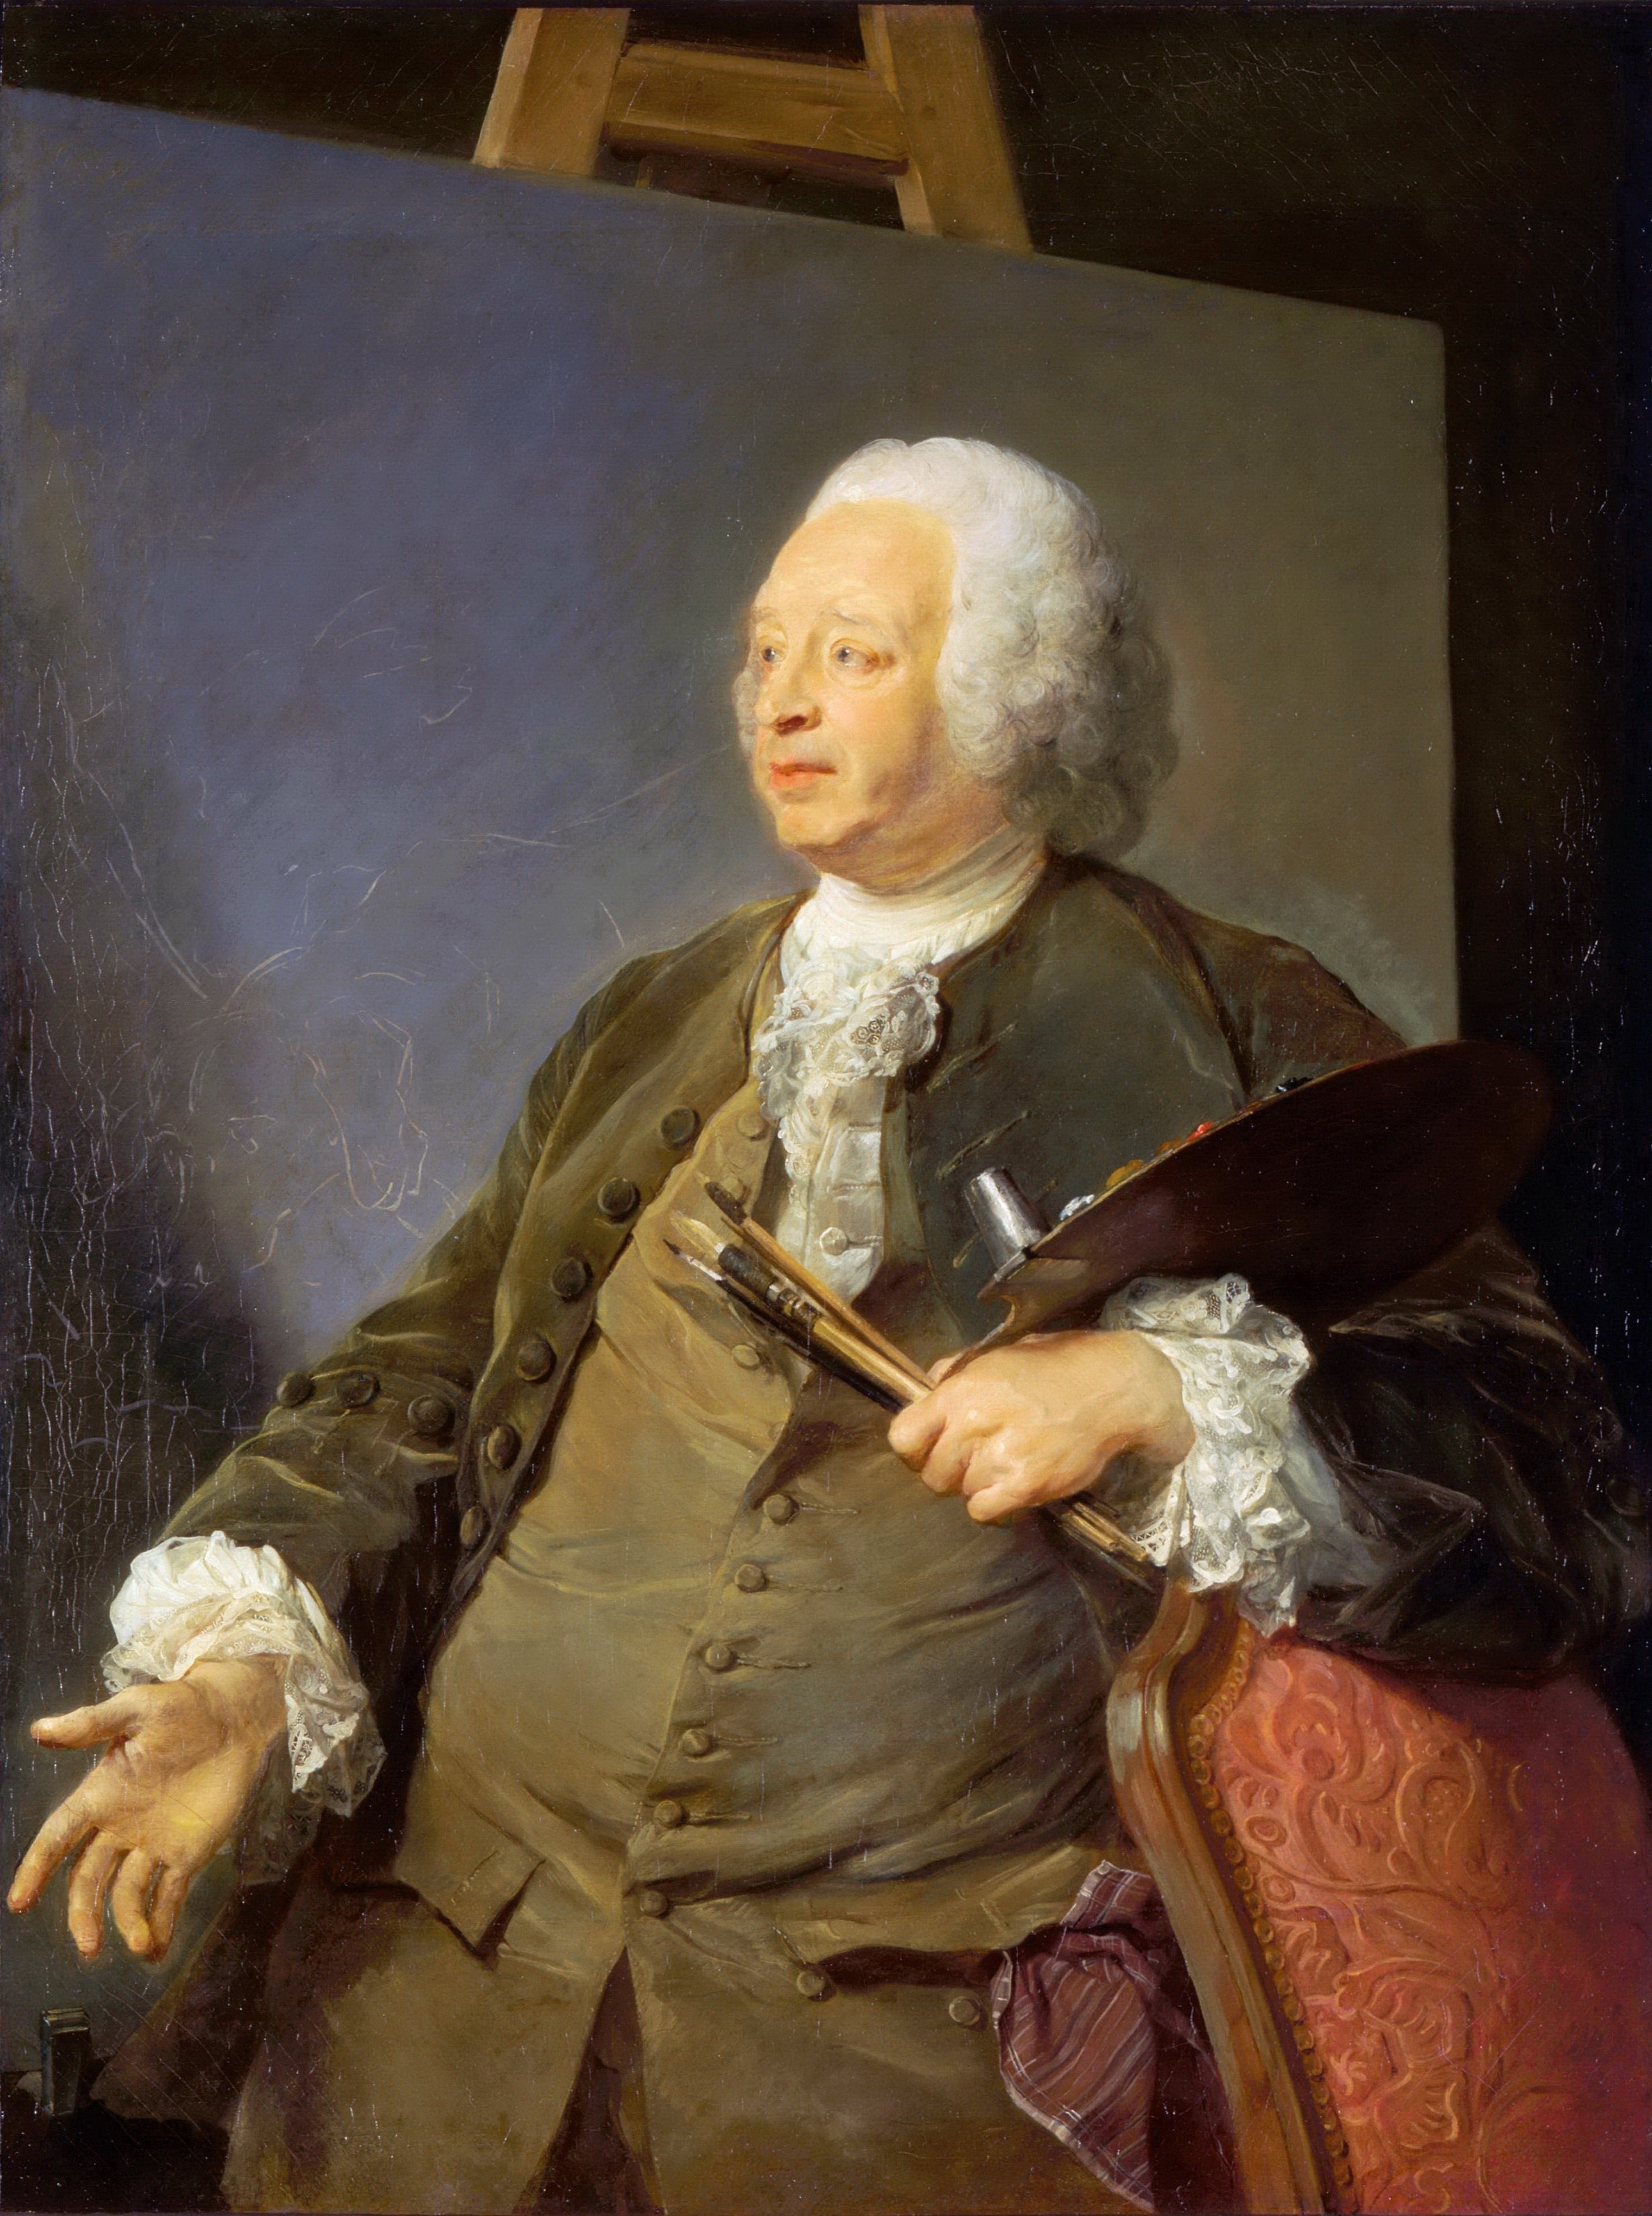 Jean-Baptiste Oudry - March 17, 1686 - April 30, 1755